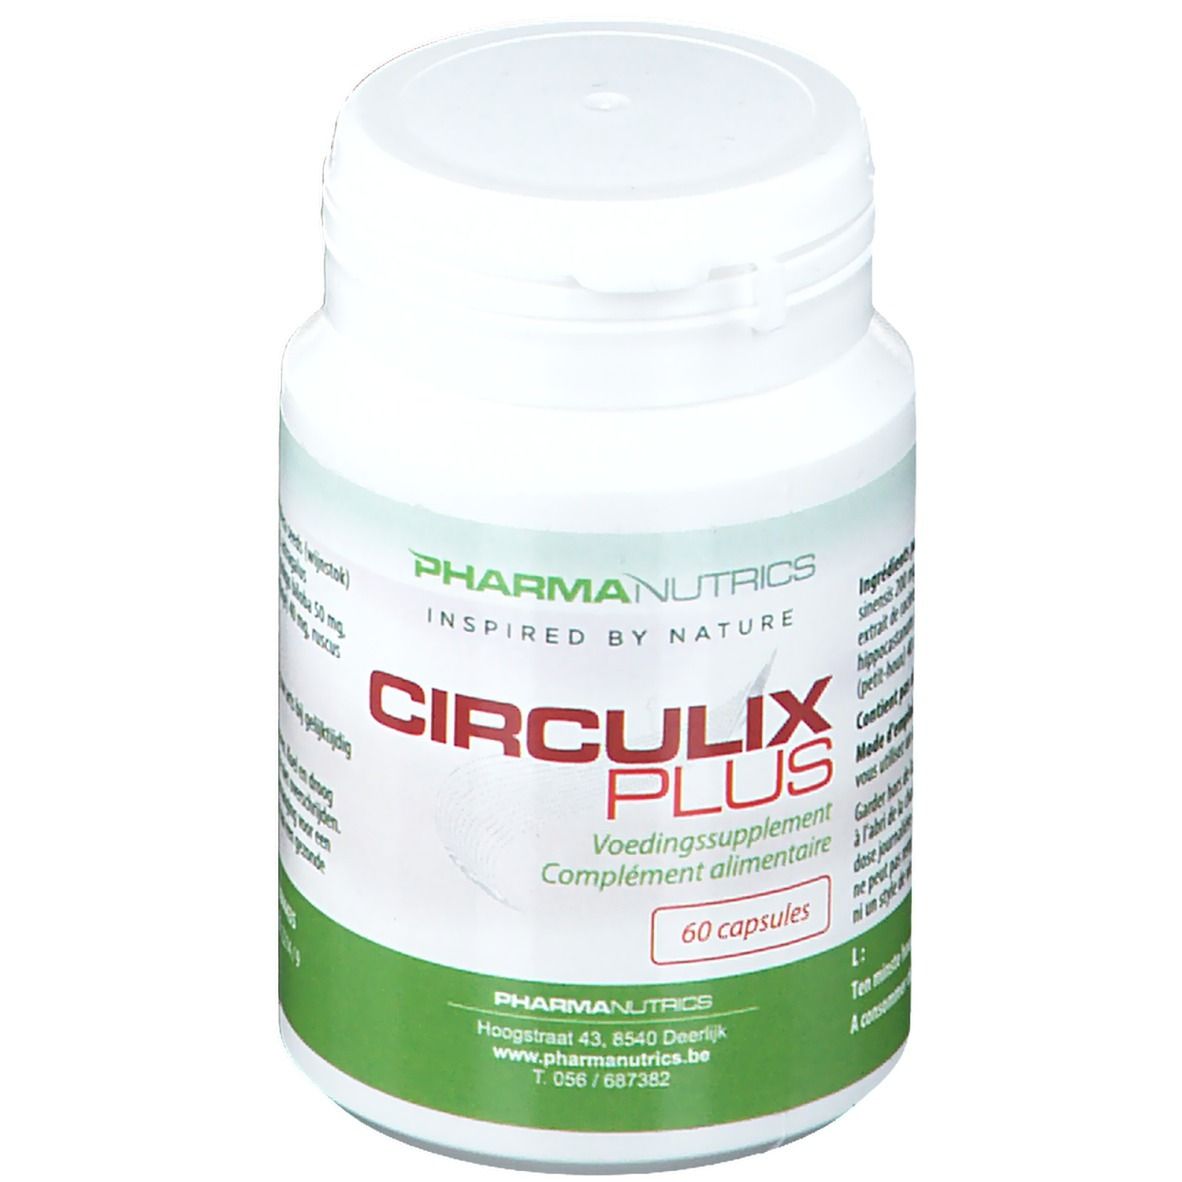 Pharmanutrics Circulix Plus